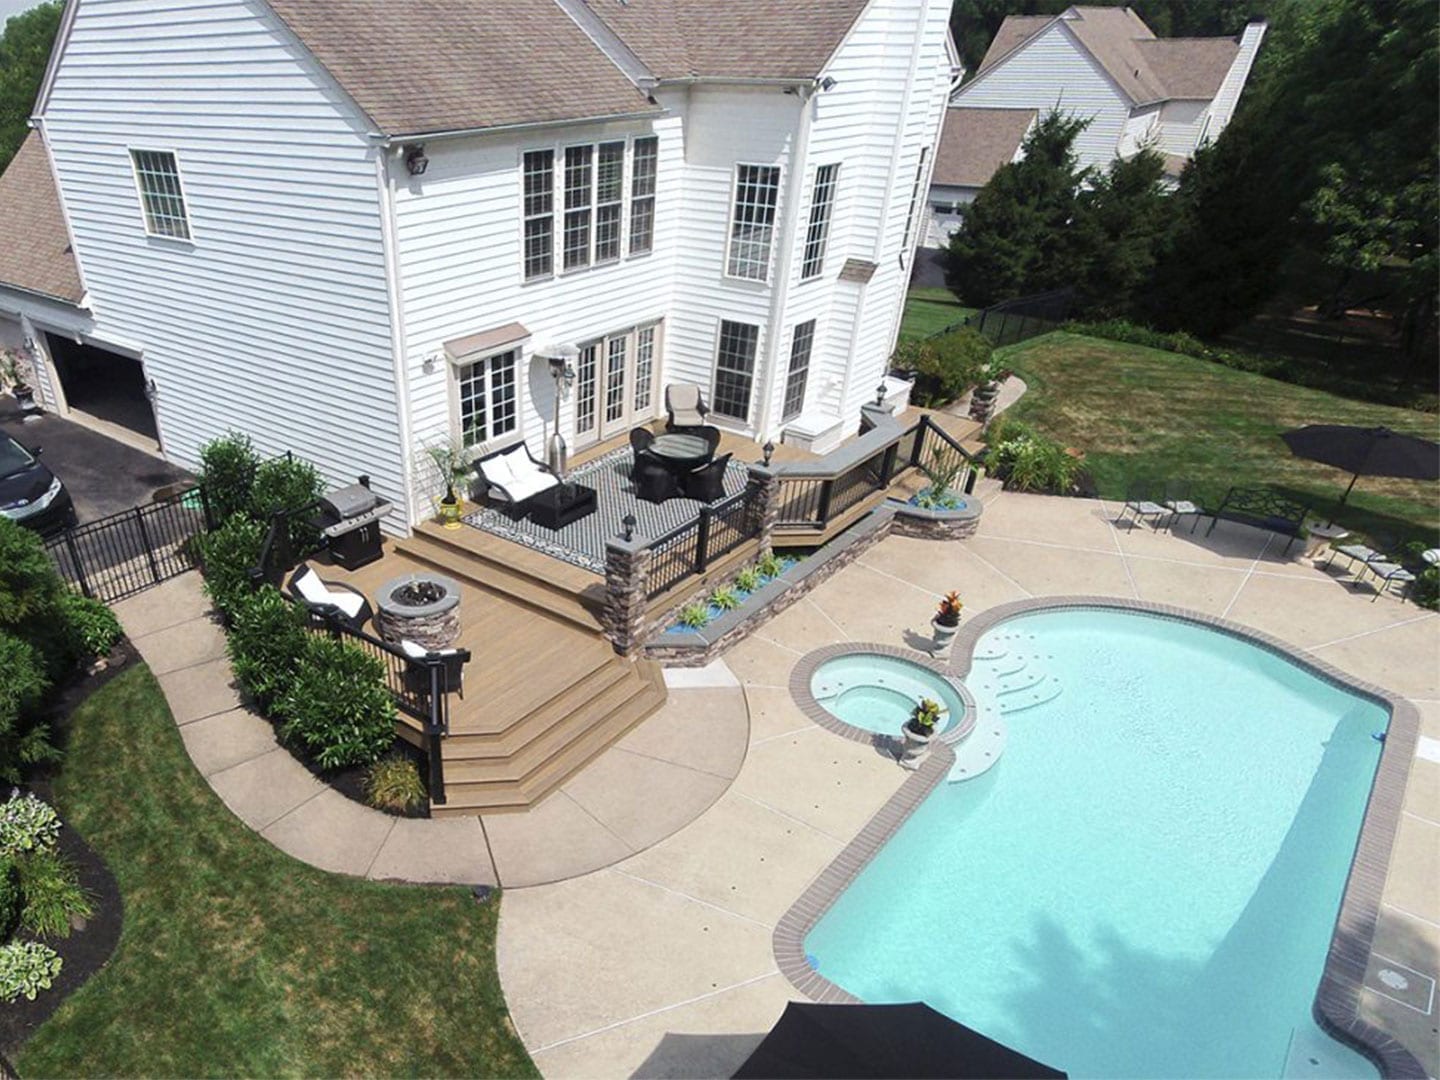 Pool Deck Ideas Decking, Backyard Designs With Inground Pools